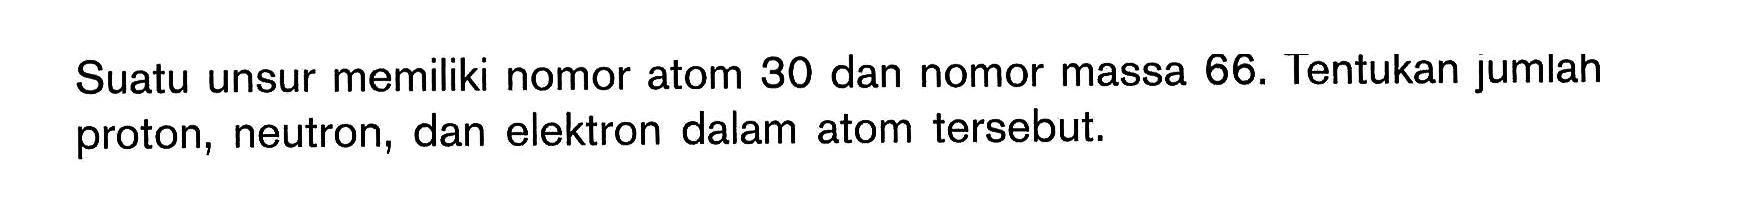 Suatu unsur memiliki nomor atom 30 dan nomor massa 66. Tentukan jumlah proton, neutron, dan elektron dalam atom tersebut. 